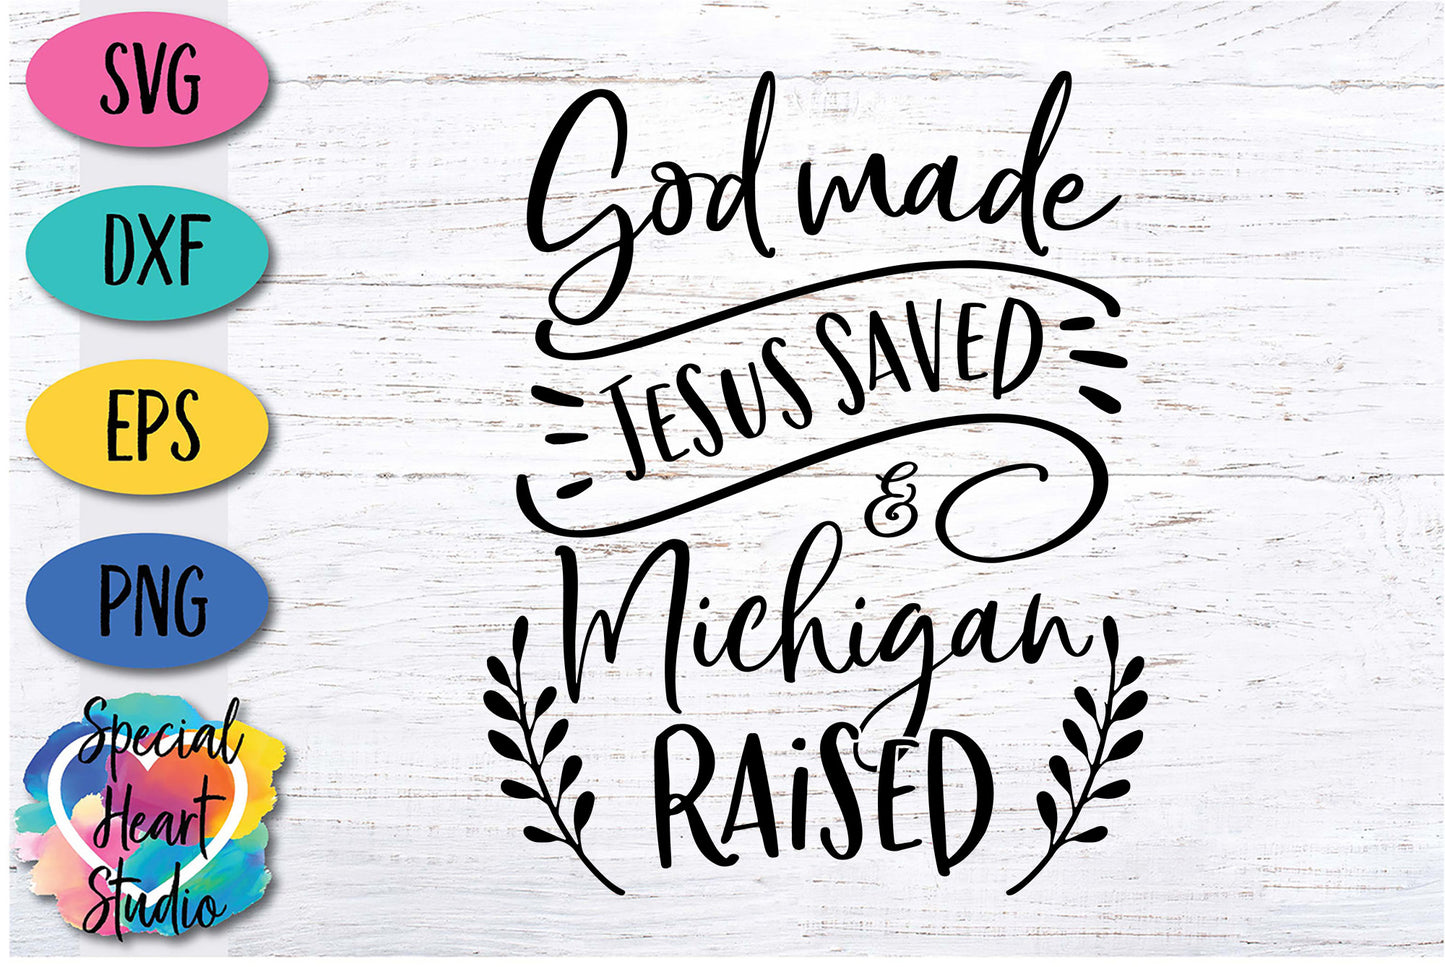 God Made, Jesus Saved and Michigan Raised